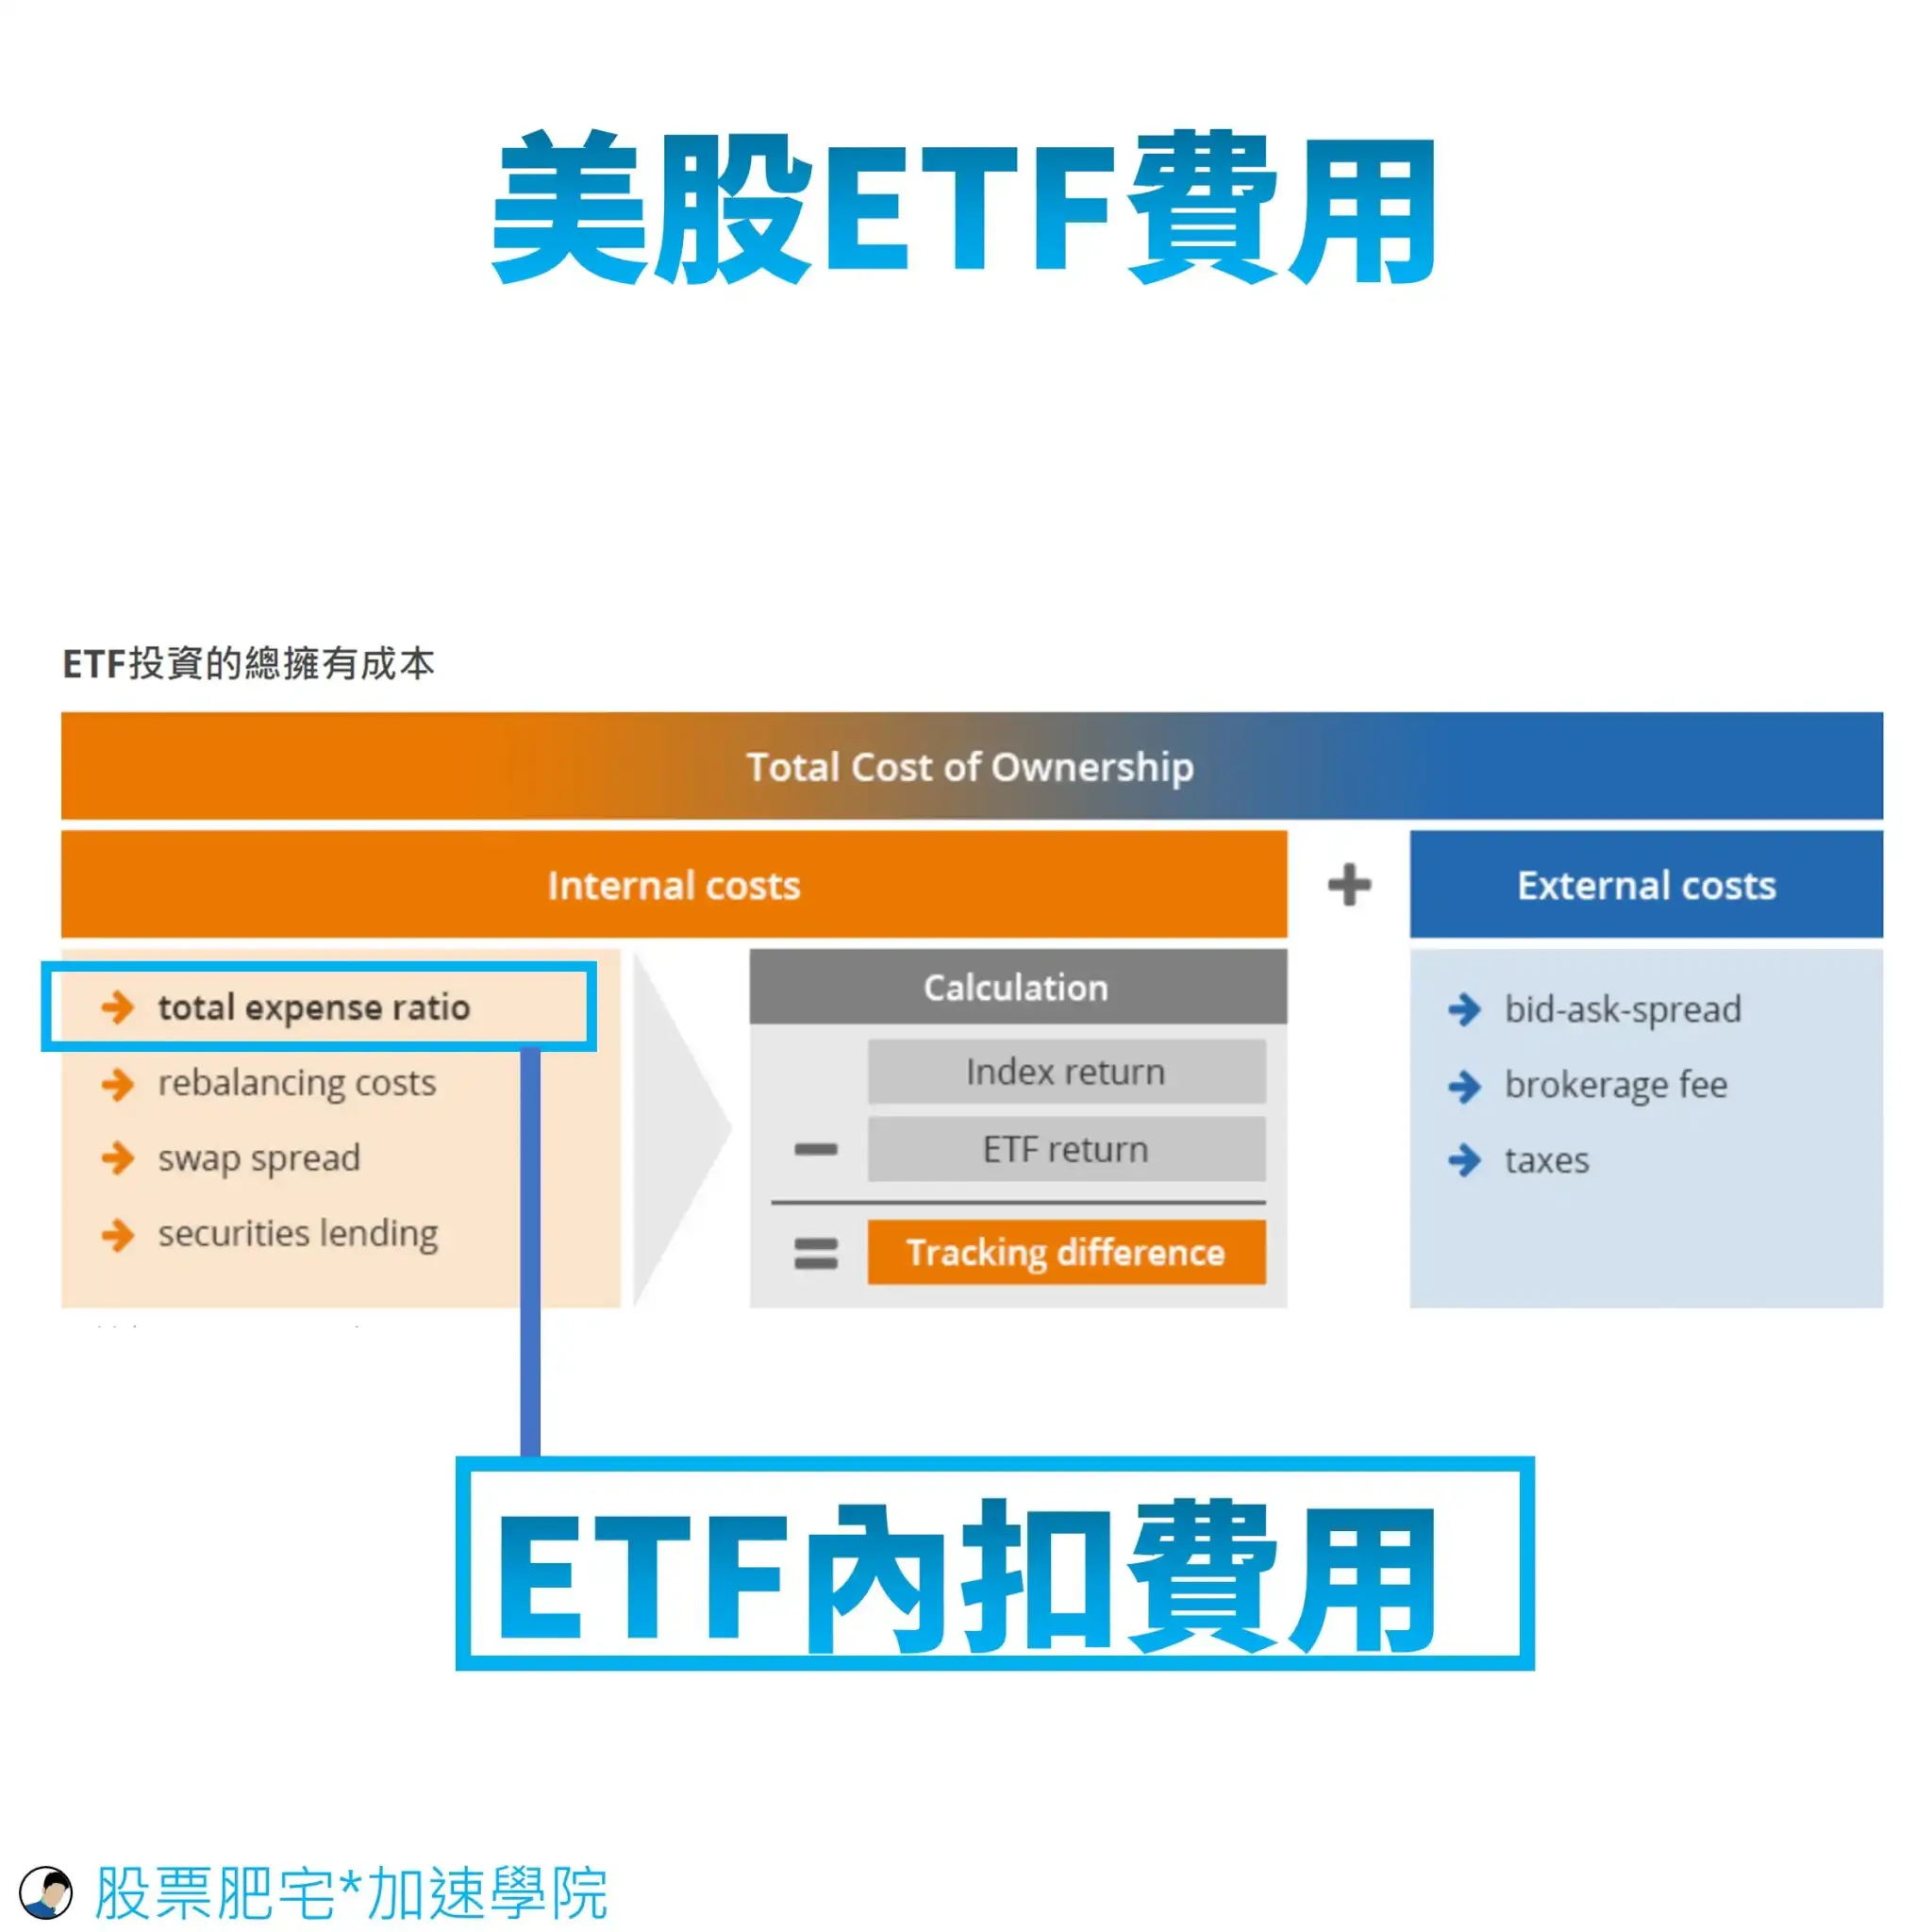 ETF內扣費用:美股